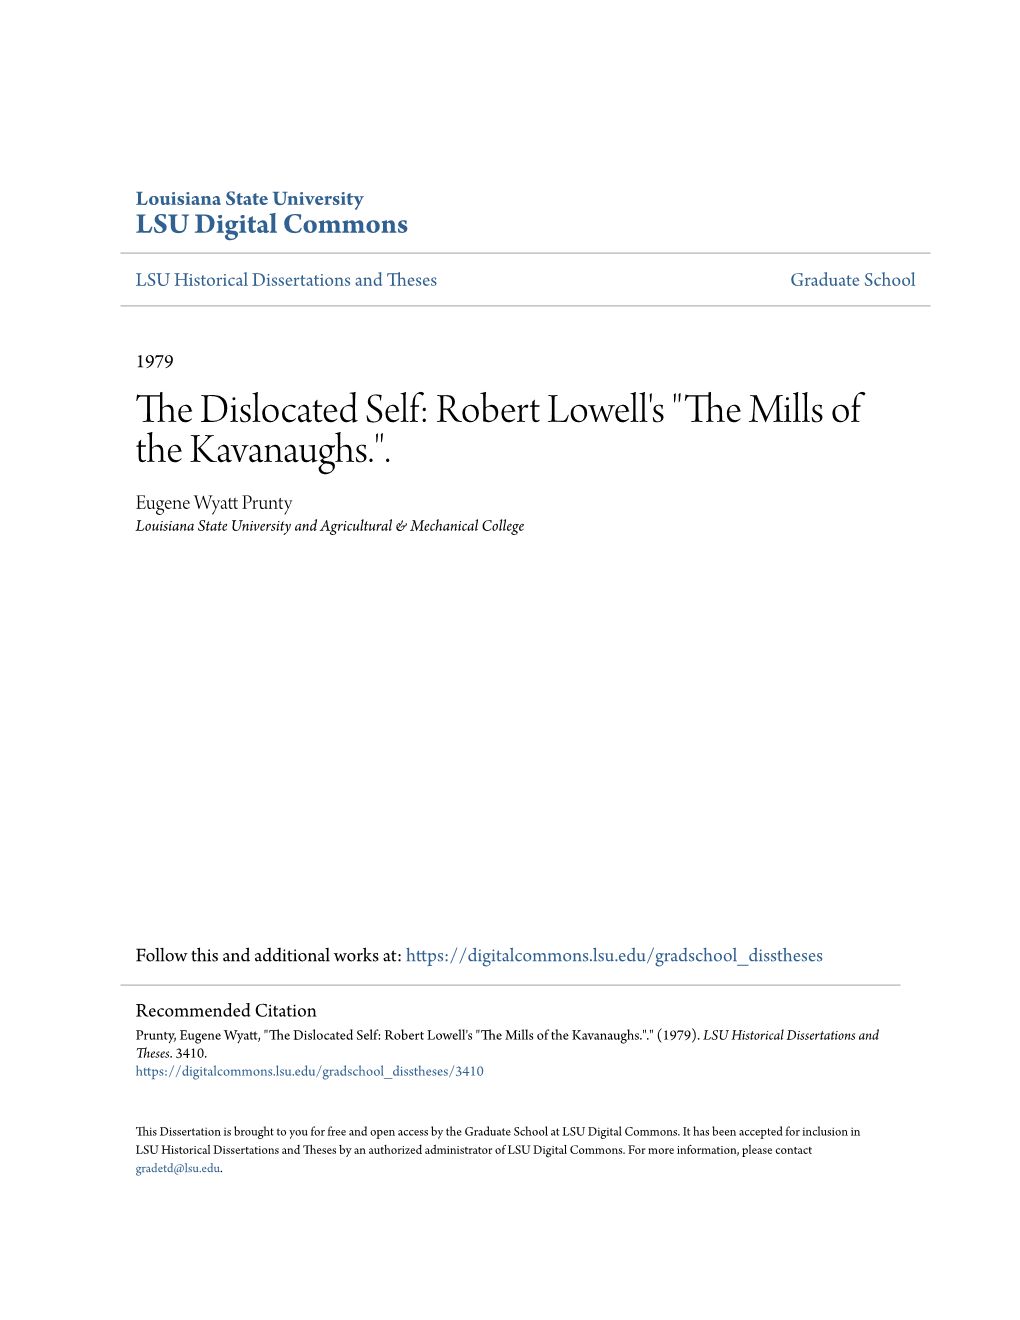 Robert Lowell's "The Im Lls of the Kavanaughs."